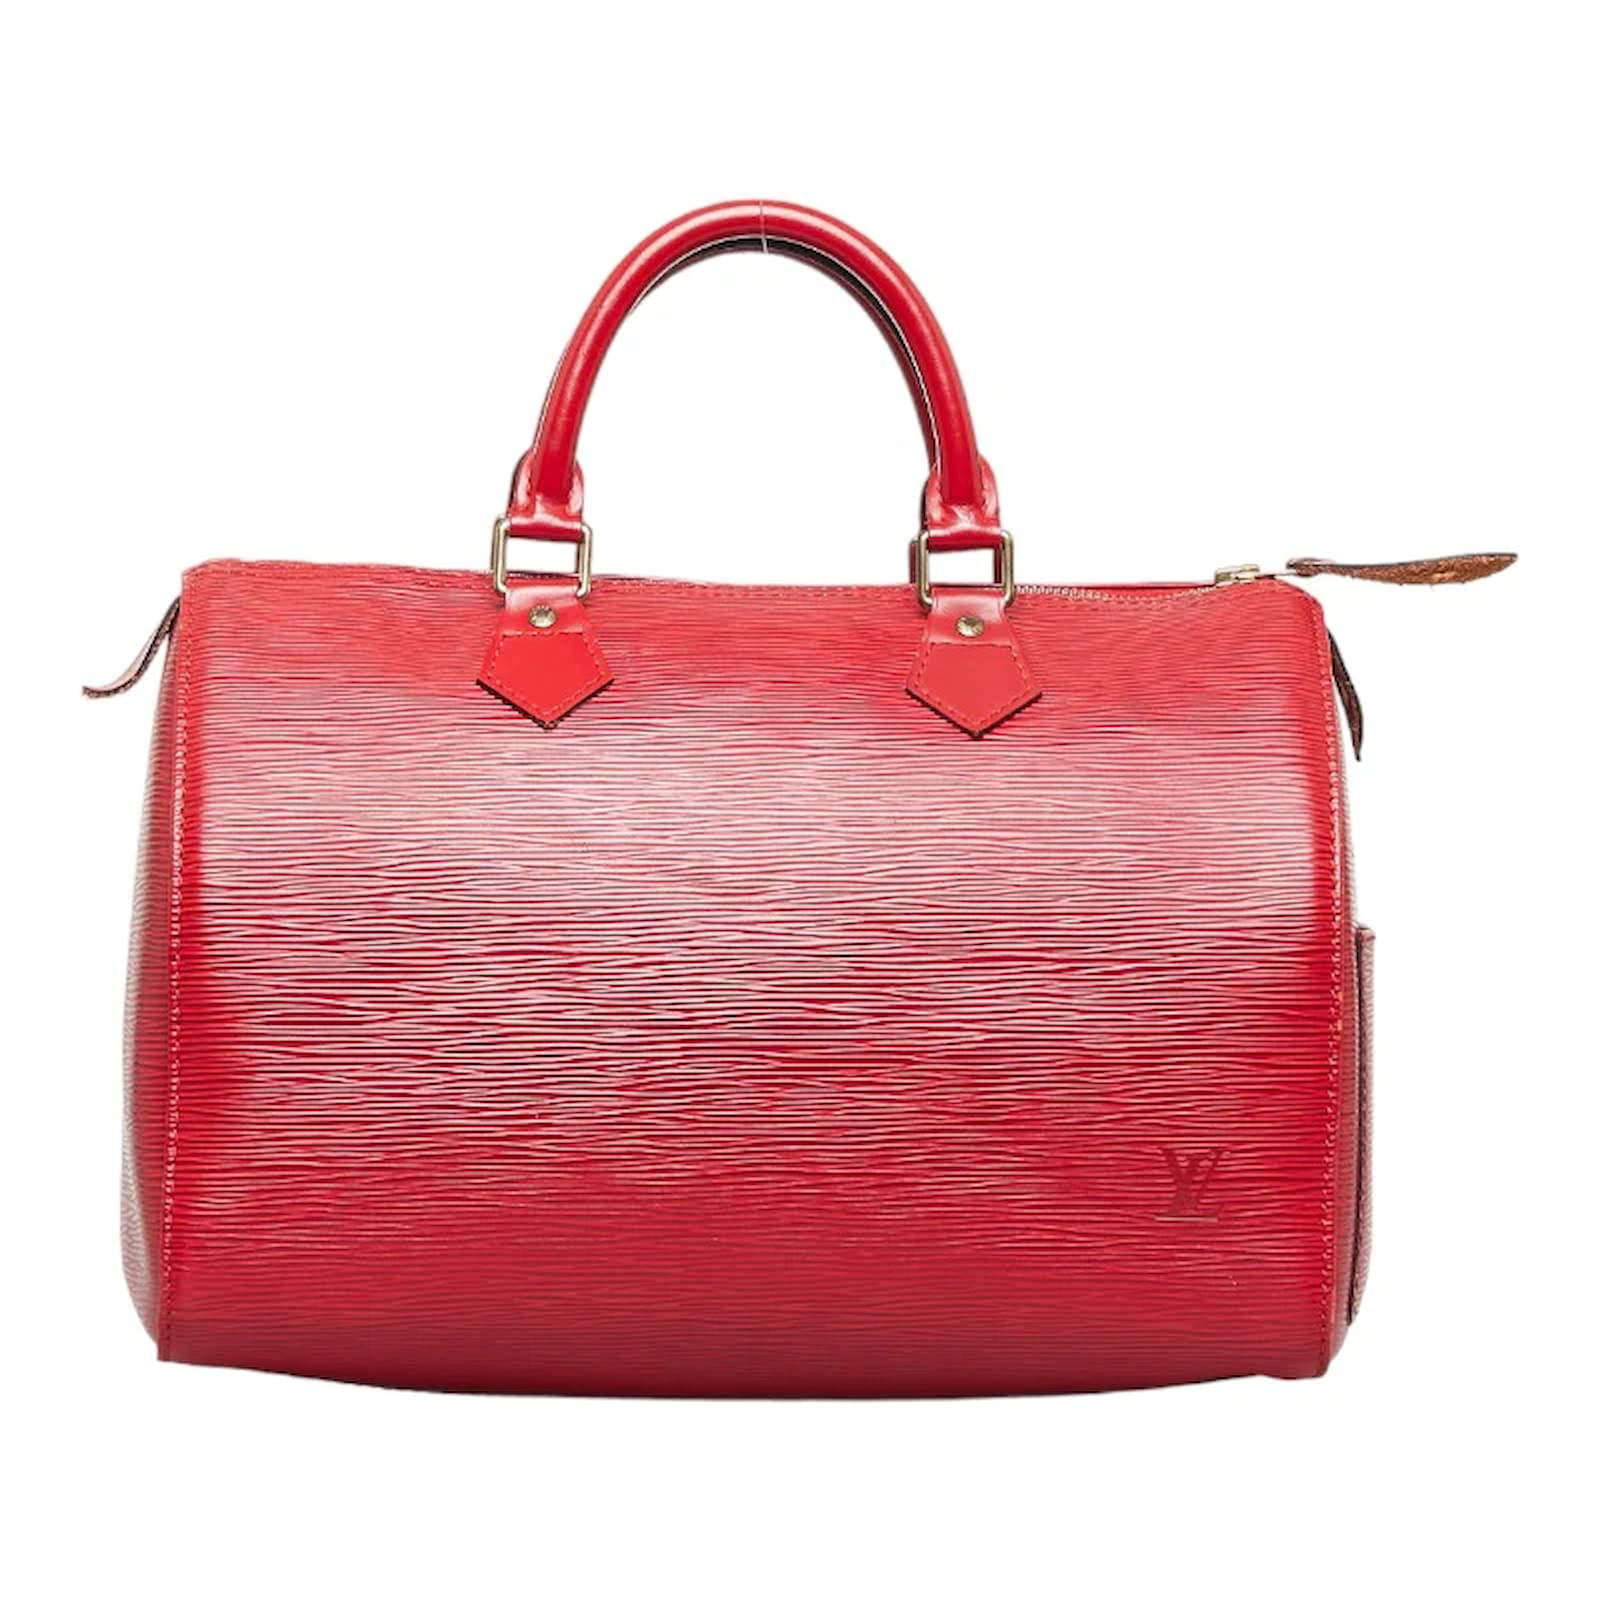 speedy style handbags